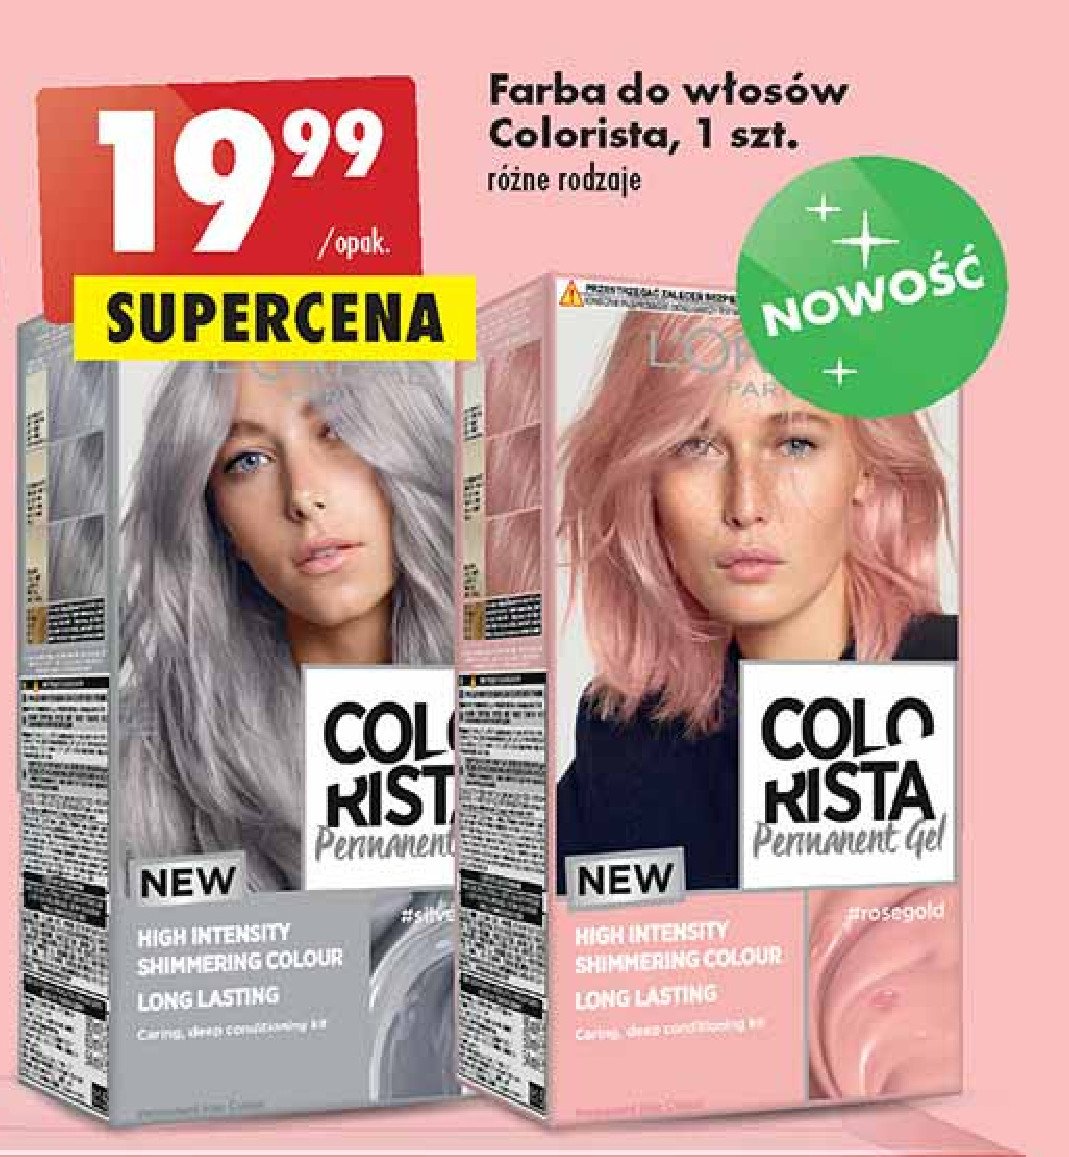 Farba do włosów rosegold L'oreal colorista permanent gel promocja